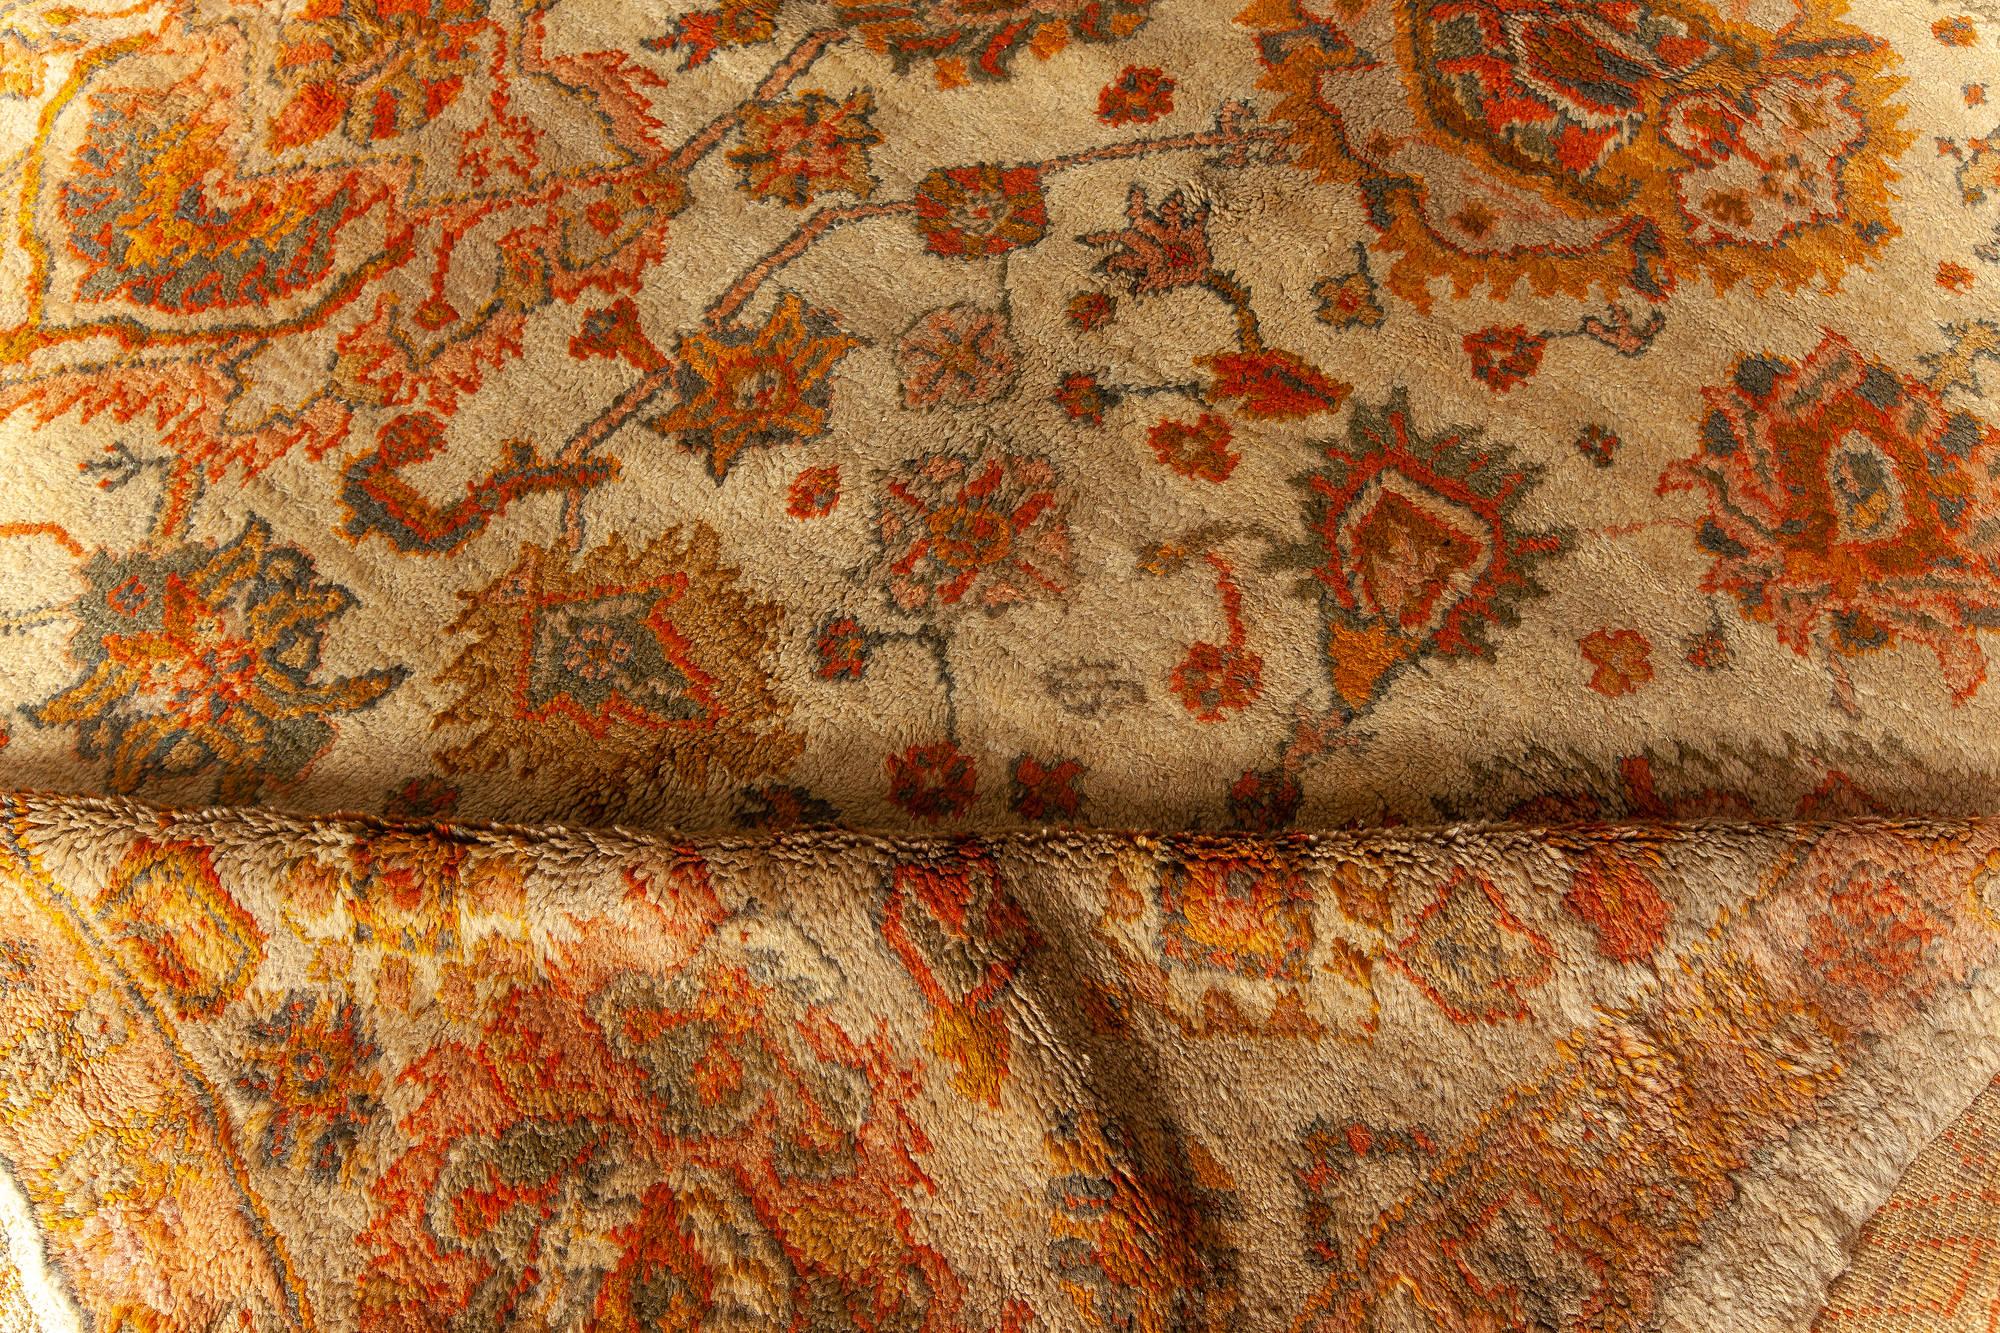 Antique Turkish Oushak botanic beige, orange, yellow, green handwoven wool rug
Size: 11'7